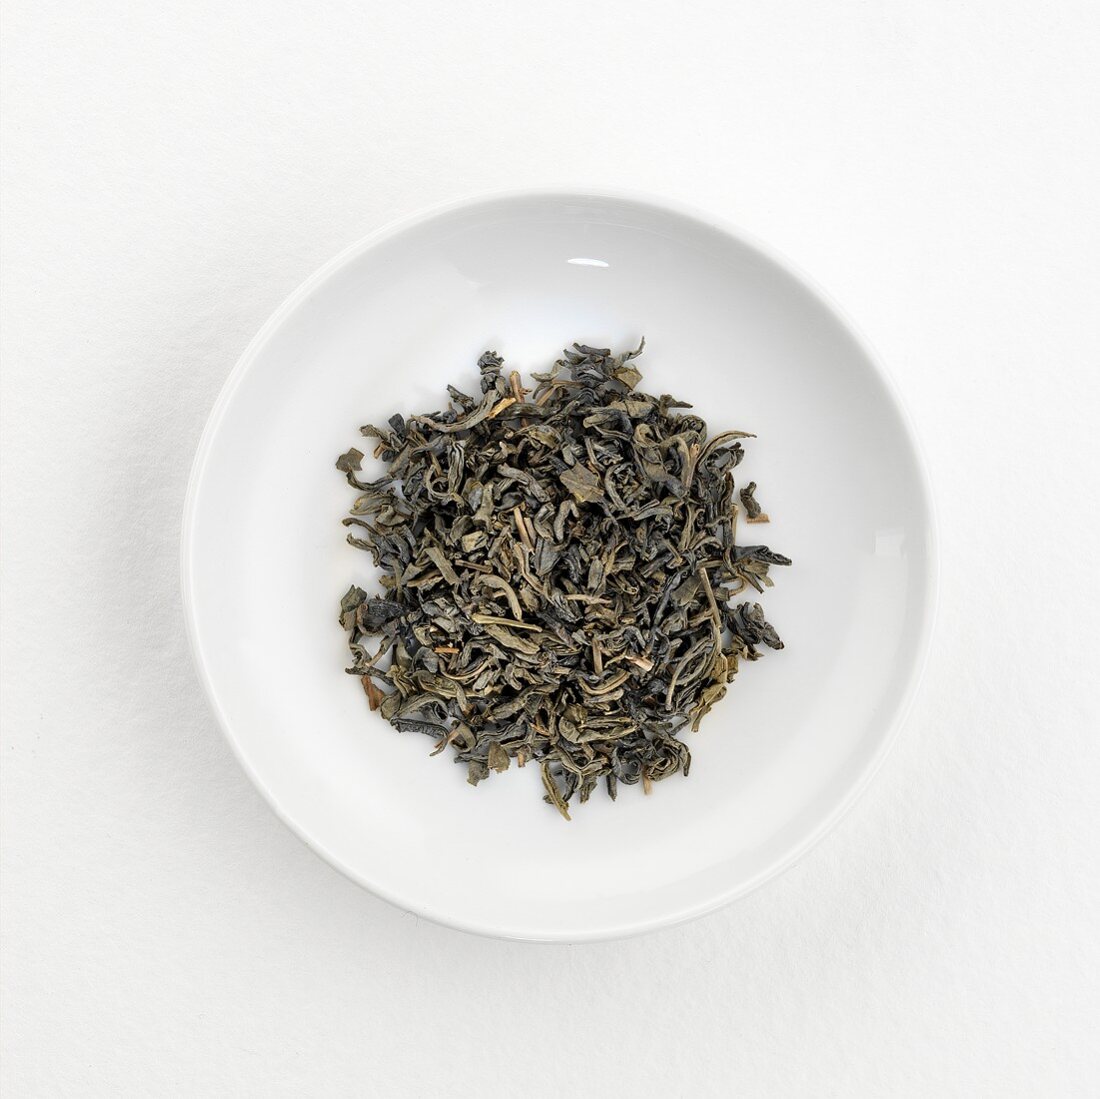 Green tea leaves (Gu Zhang, China) on plate